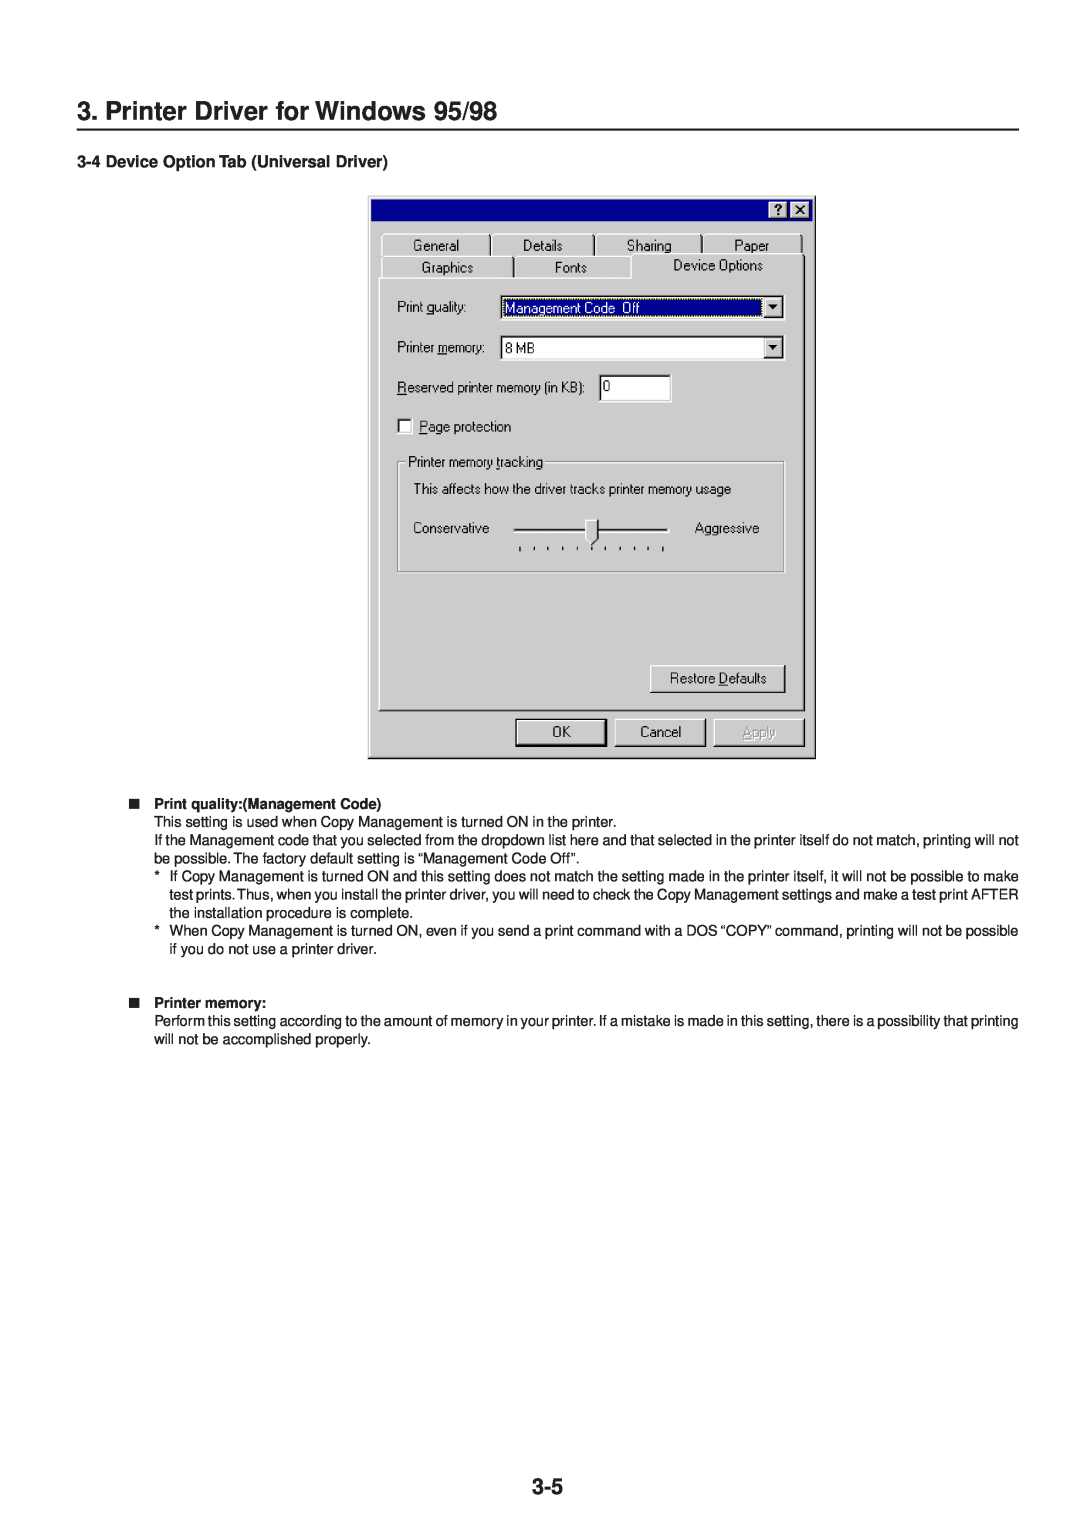 IBM Printing System Printer Driver for Windows 95/98, Device Option Tab Universal Driver, Print qualityManagement Code 